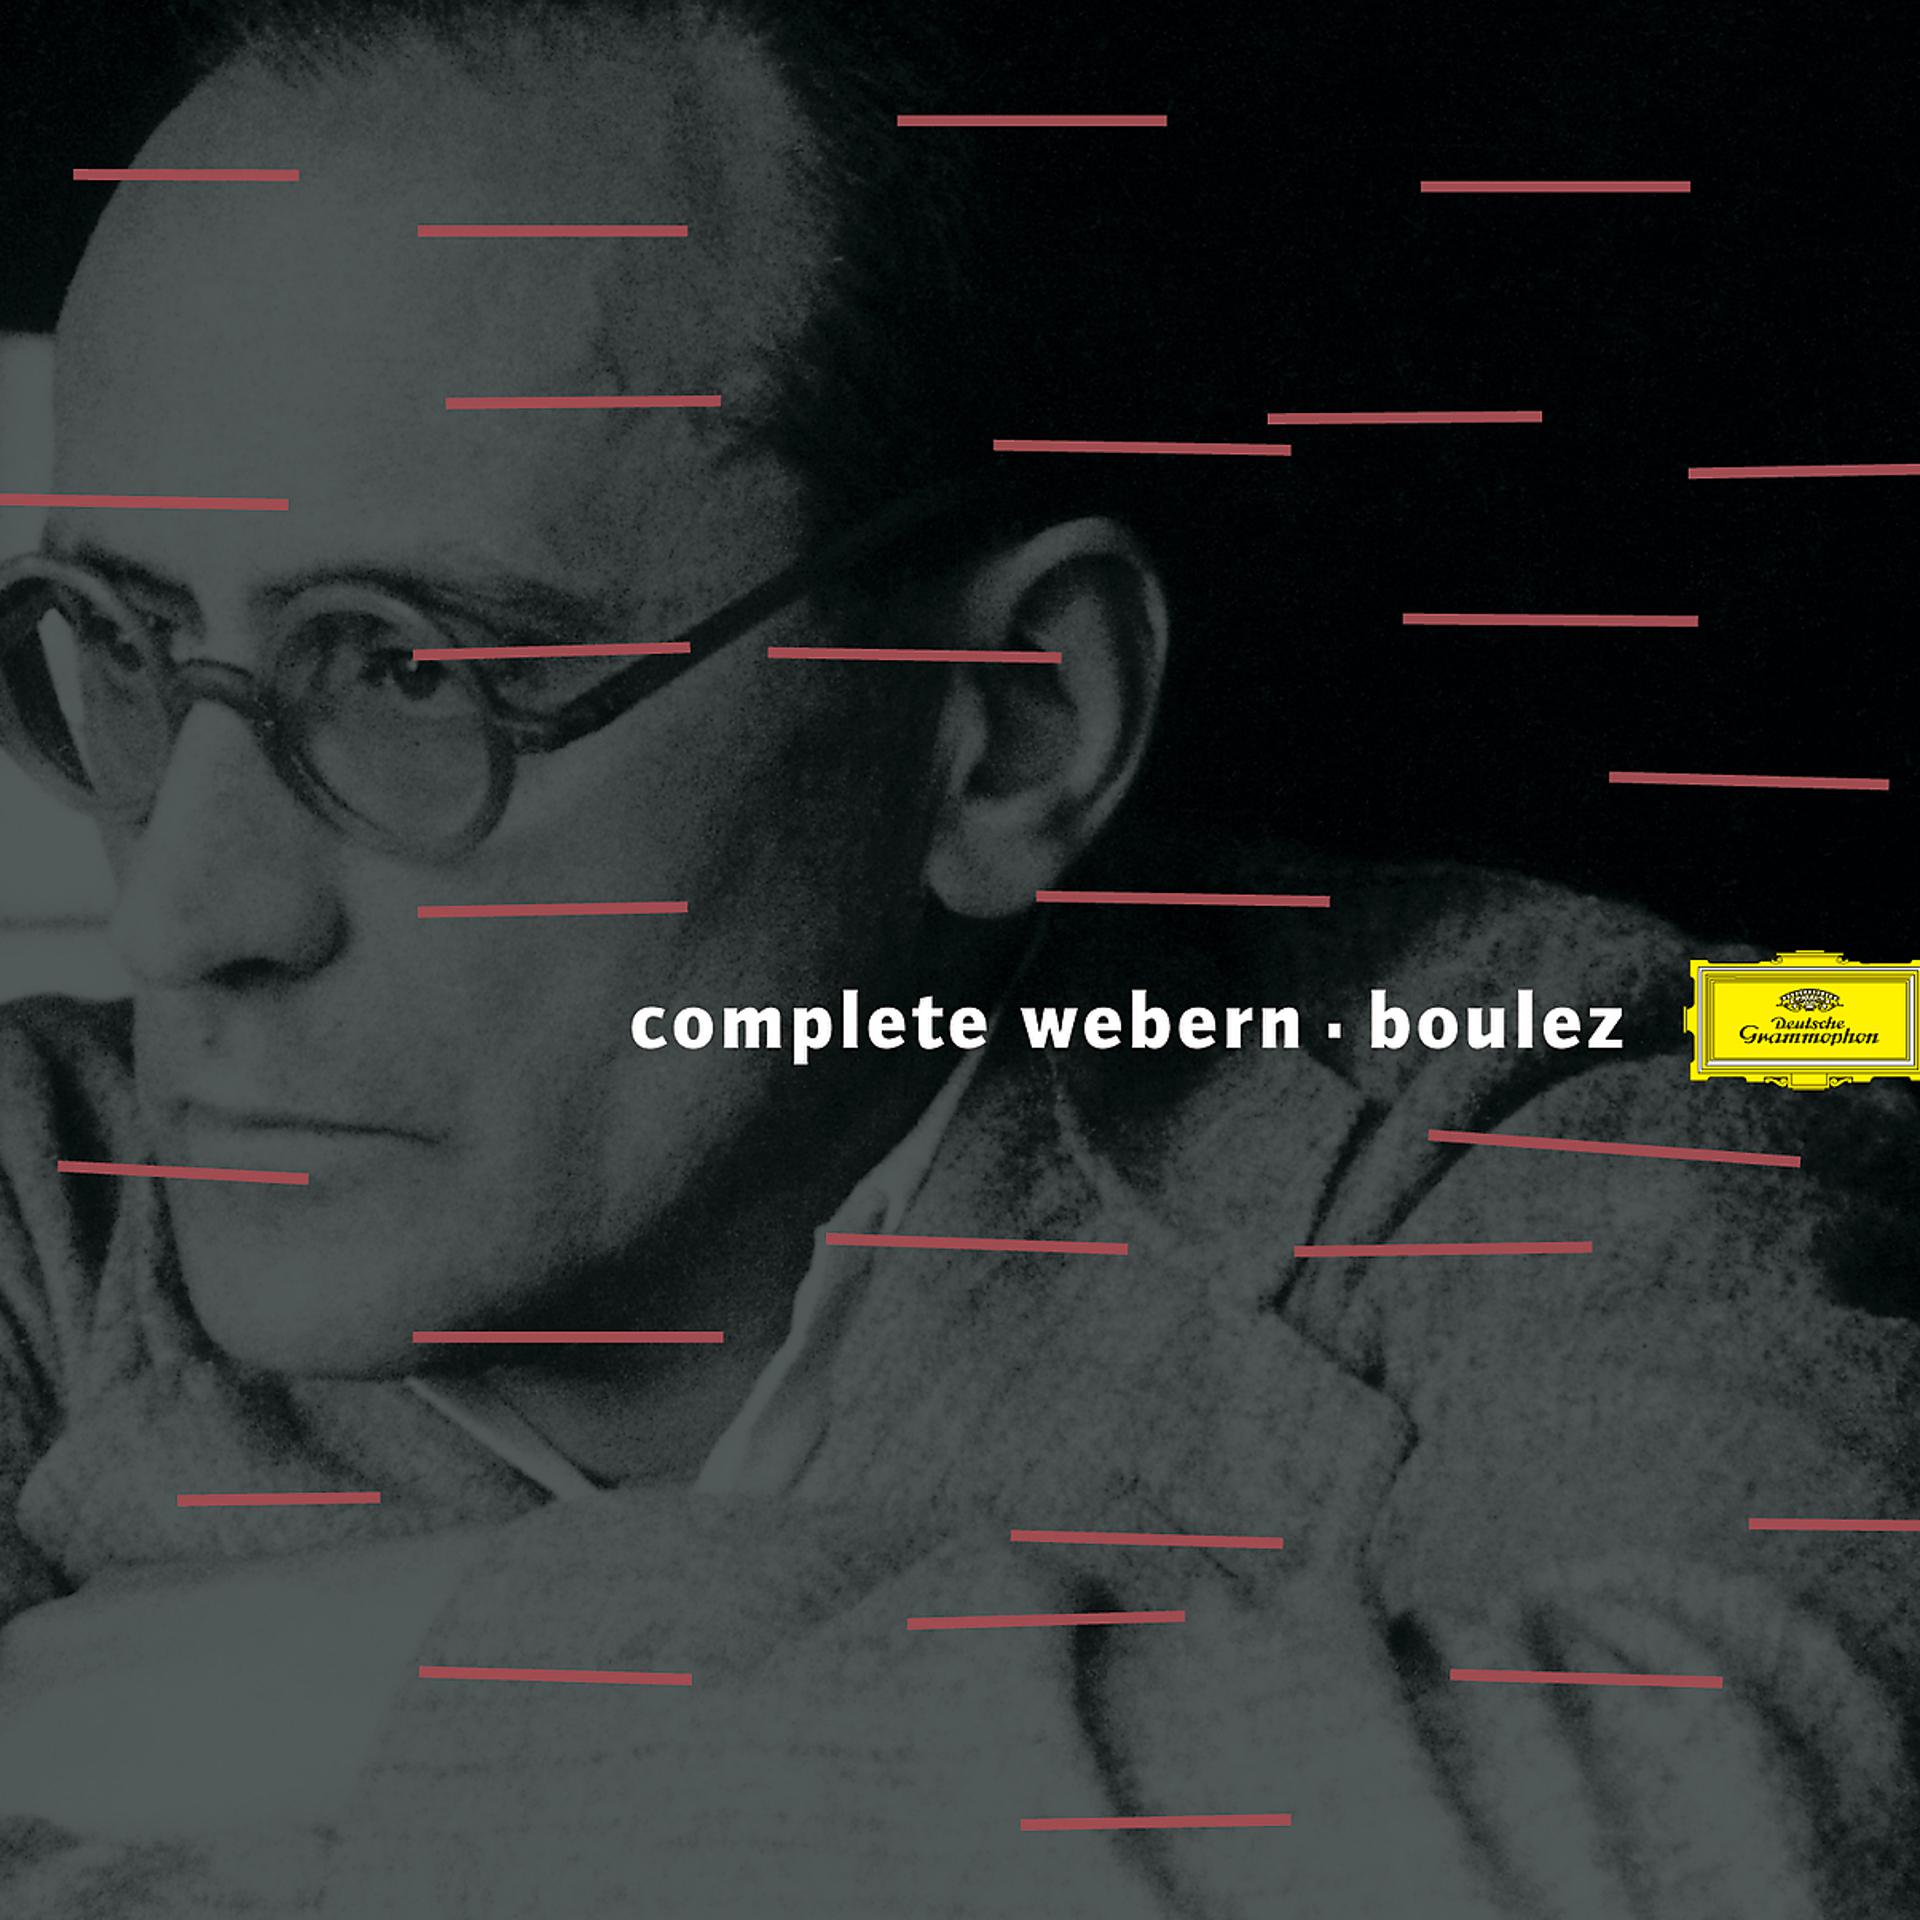 Постер альбома Boulez conducts Webern